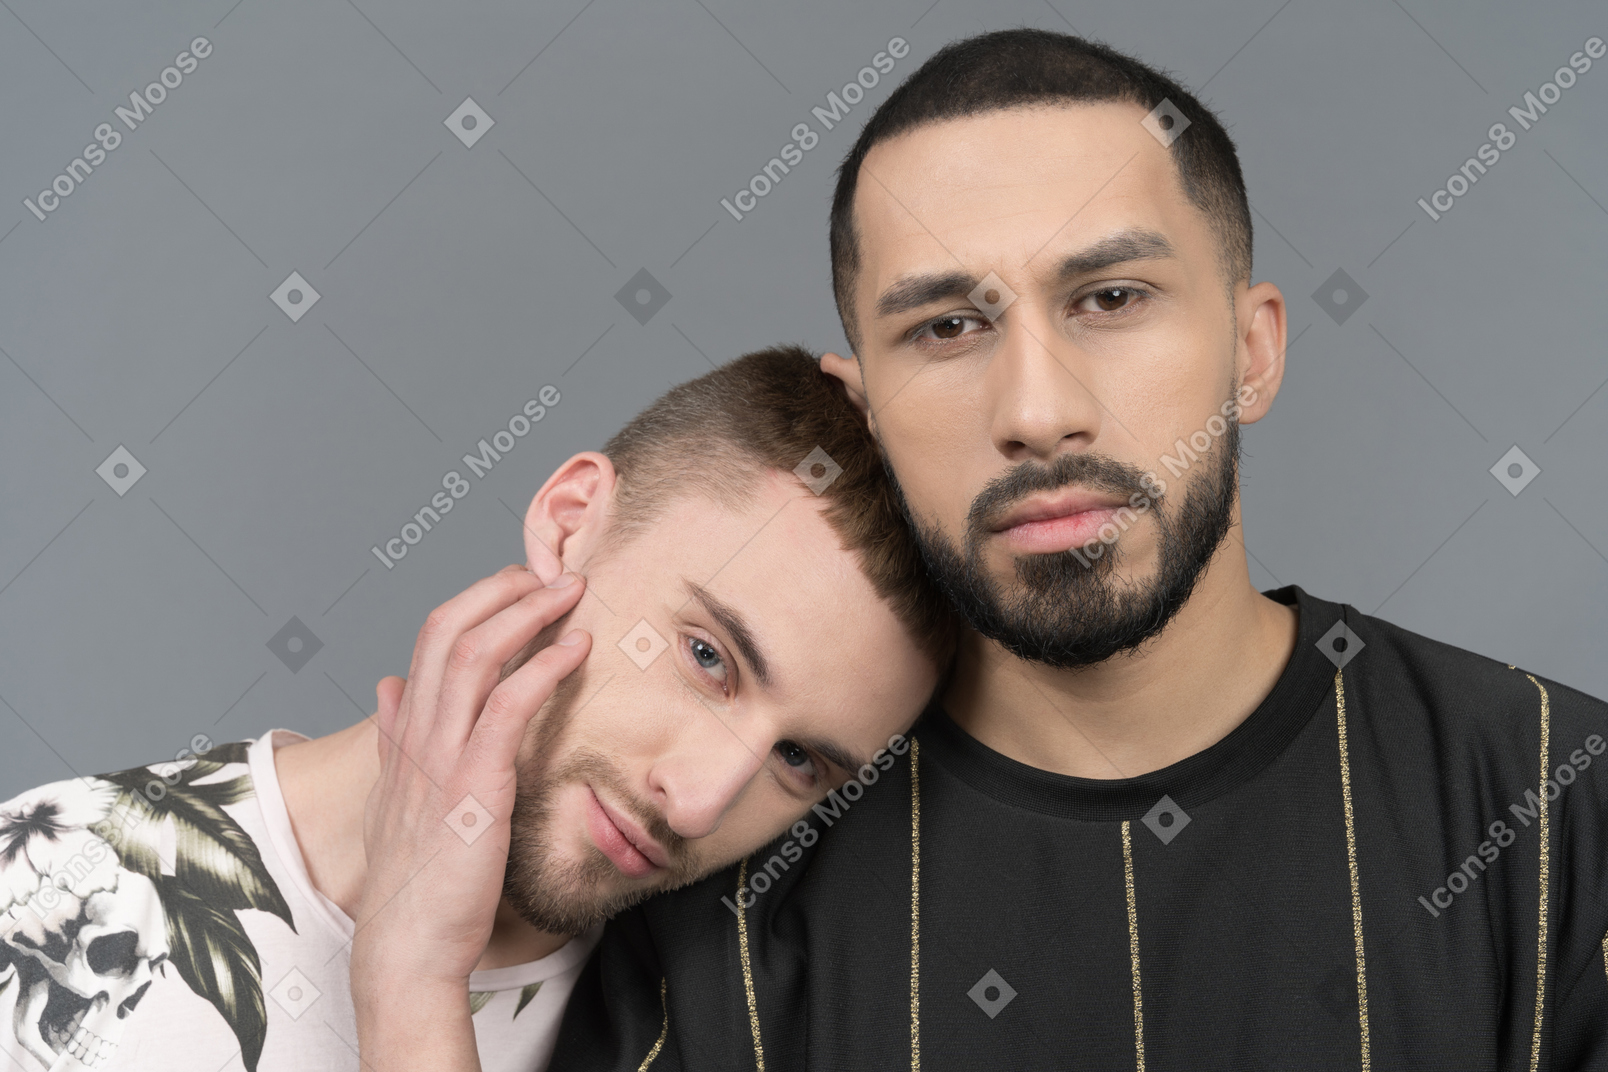 Young man putting head on partner's shoulder